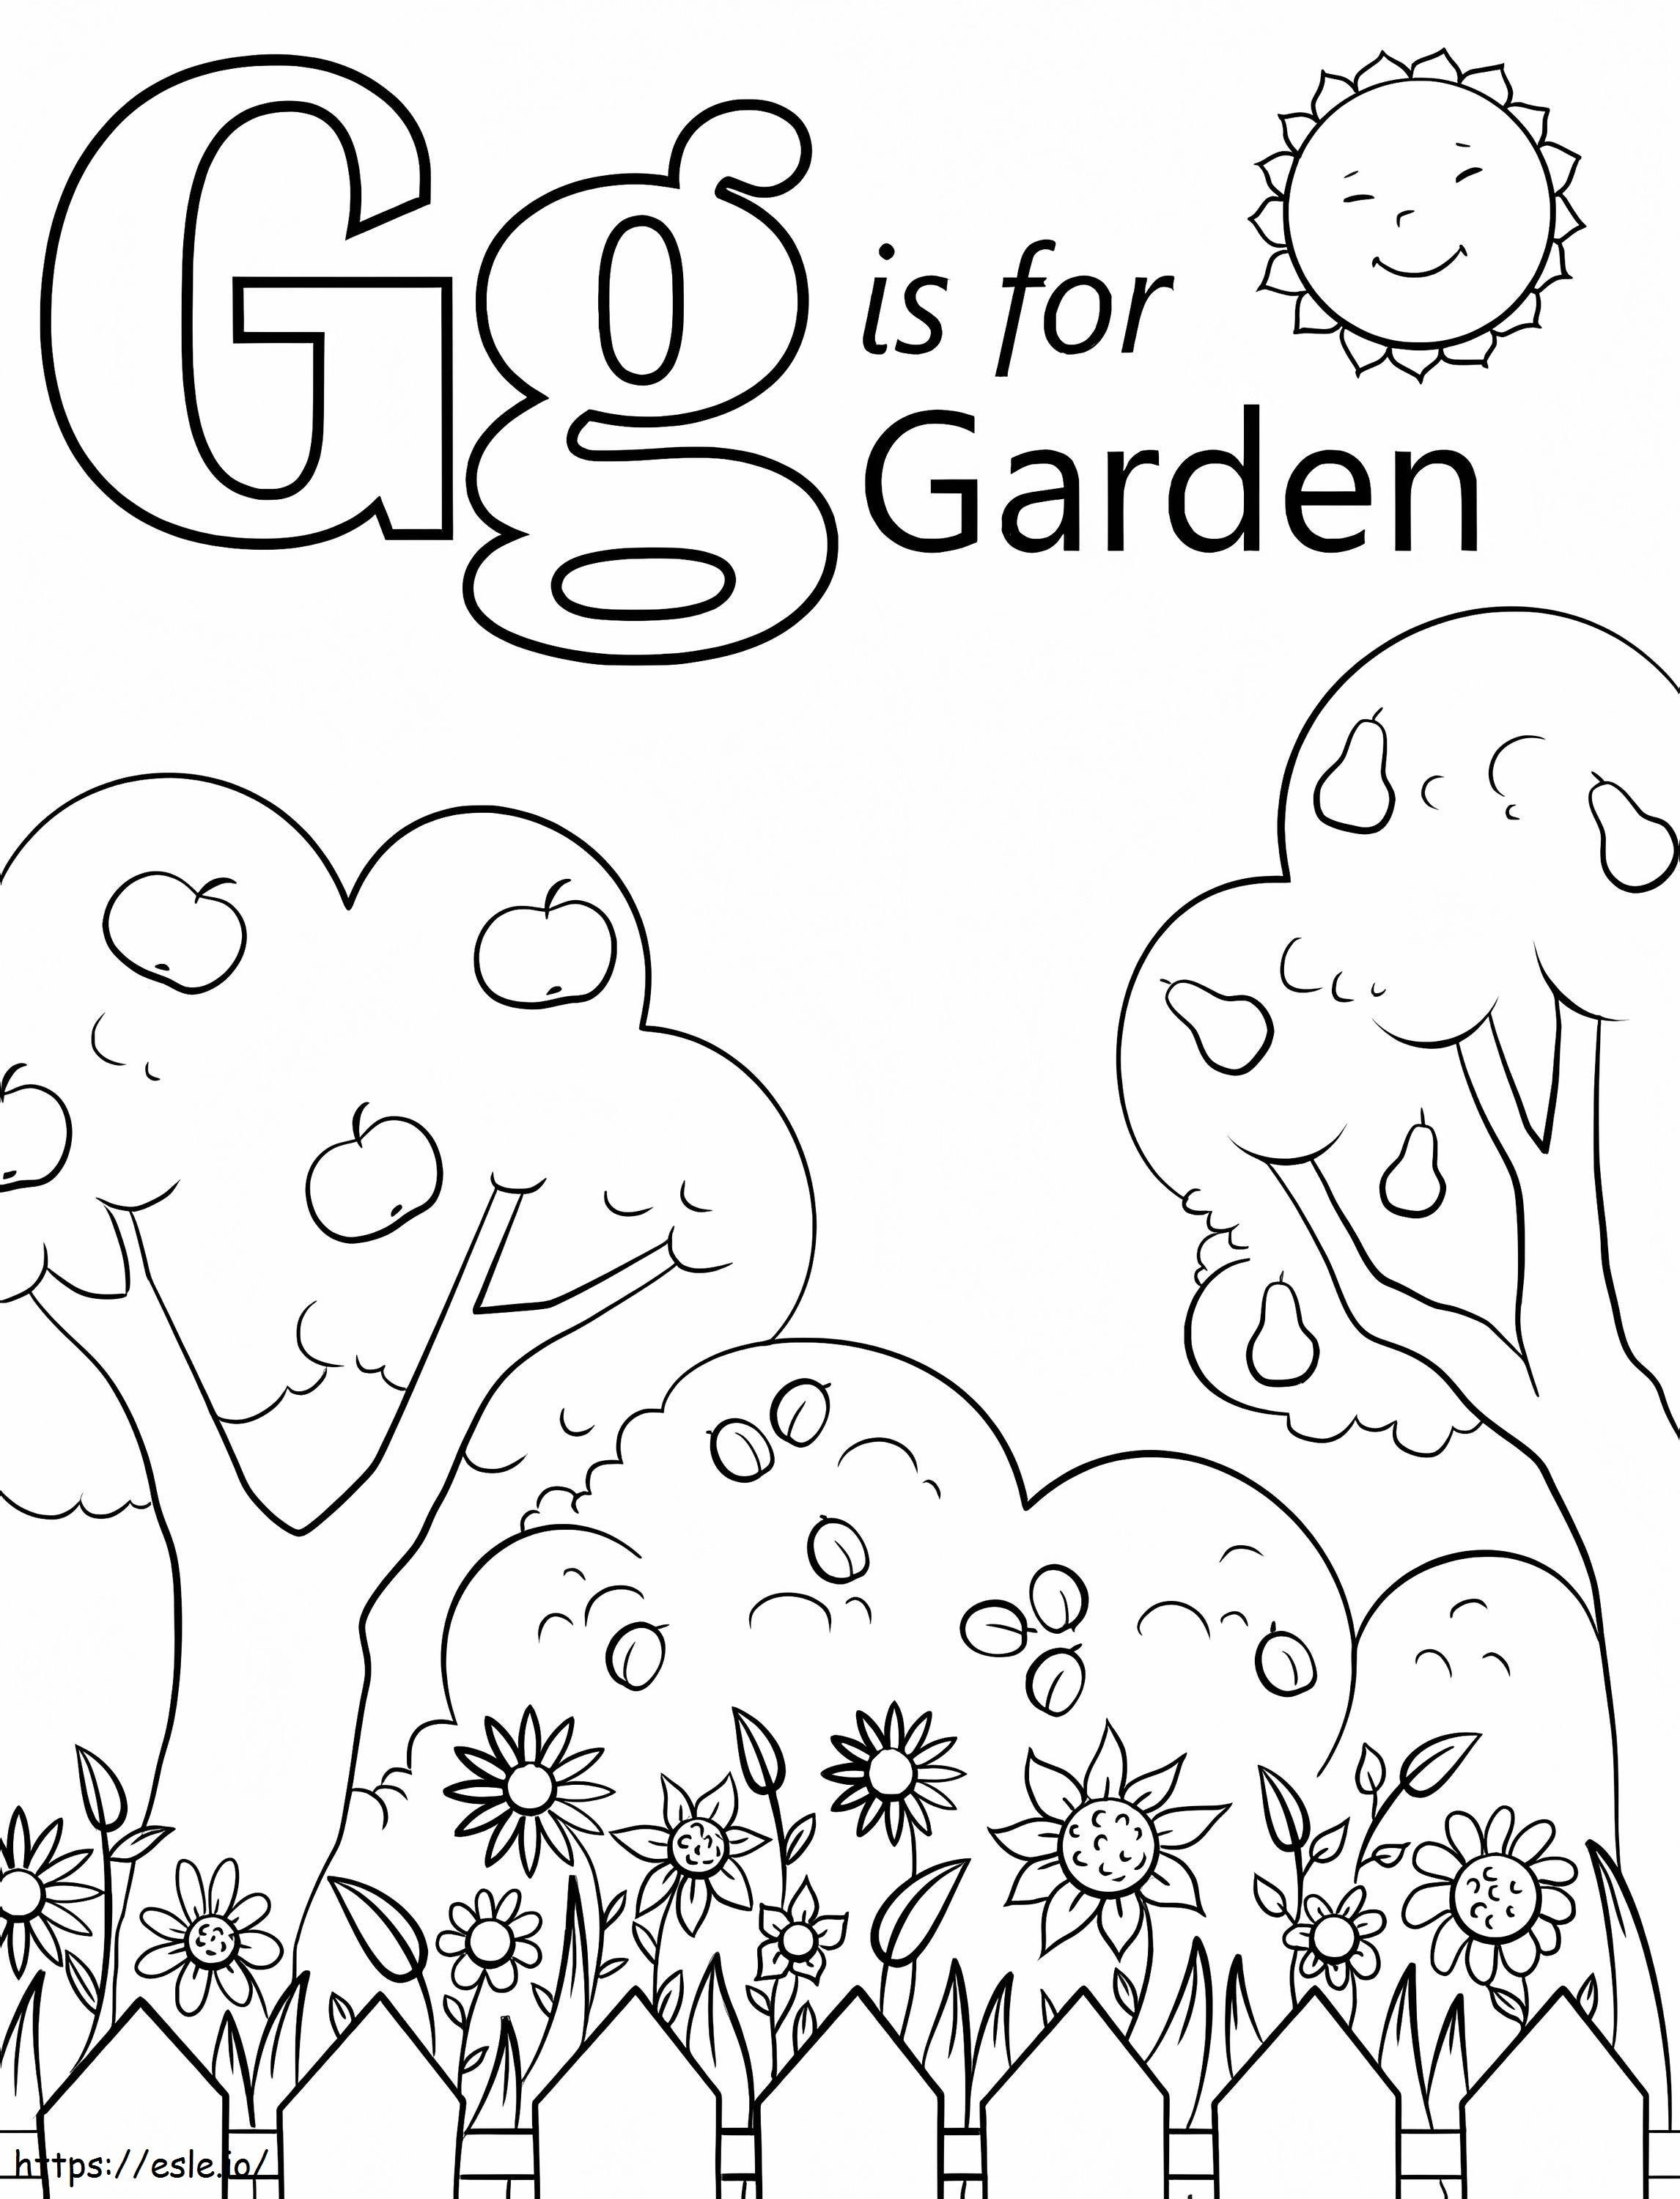 Garden 歌詞 G ぬりえ - 塗り絵